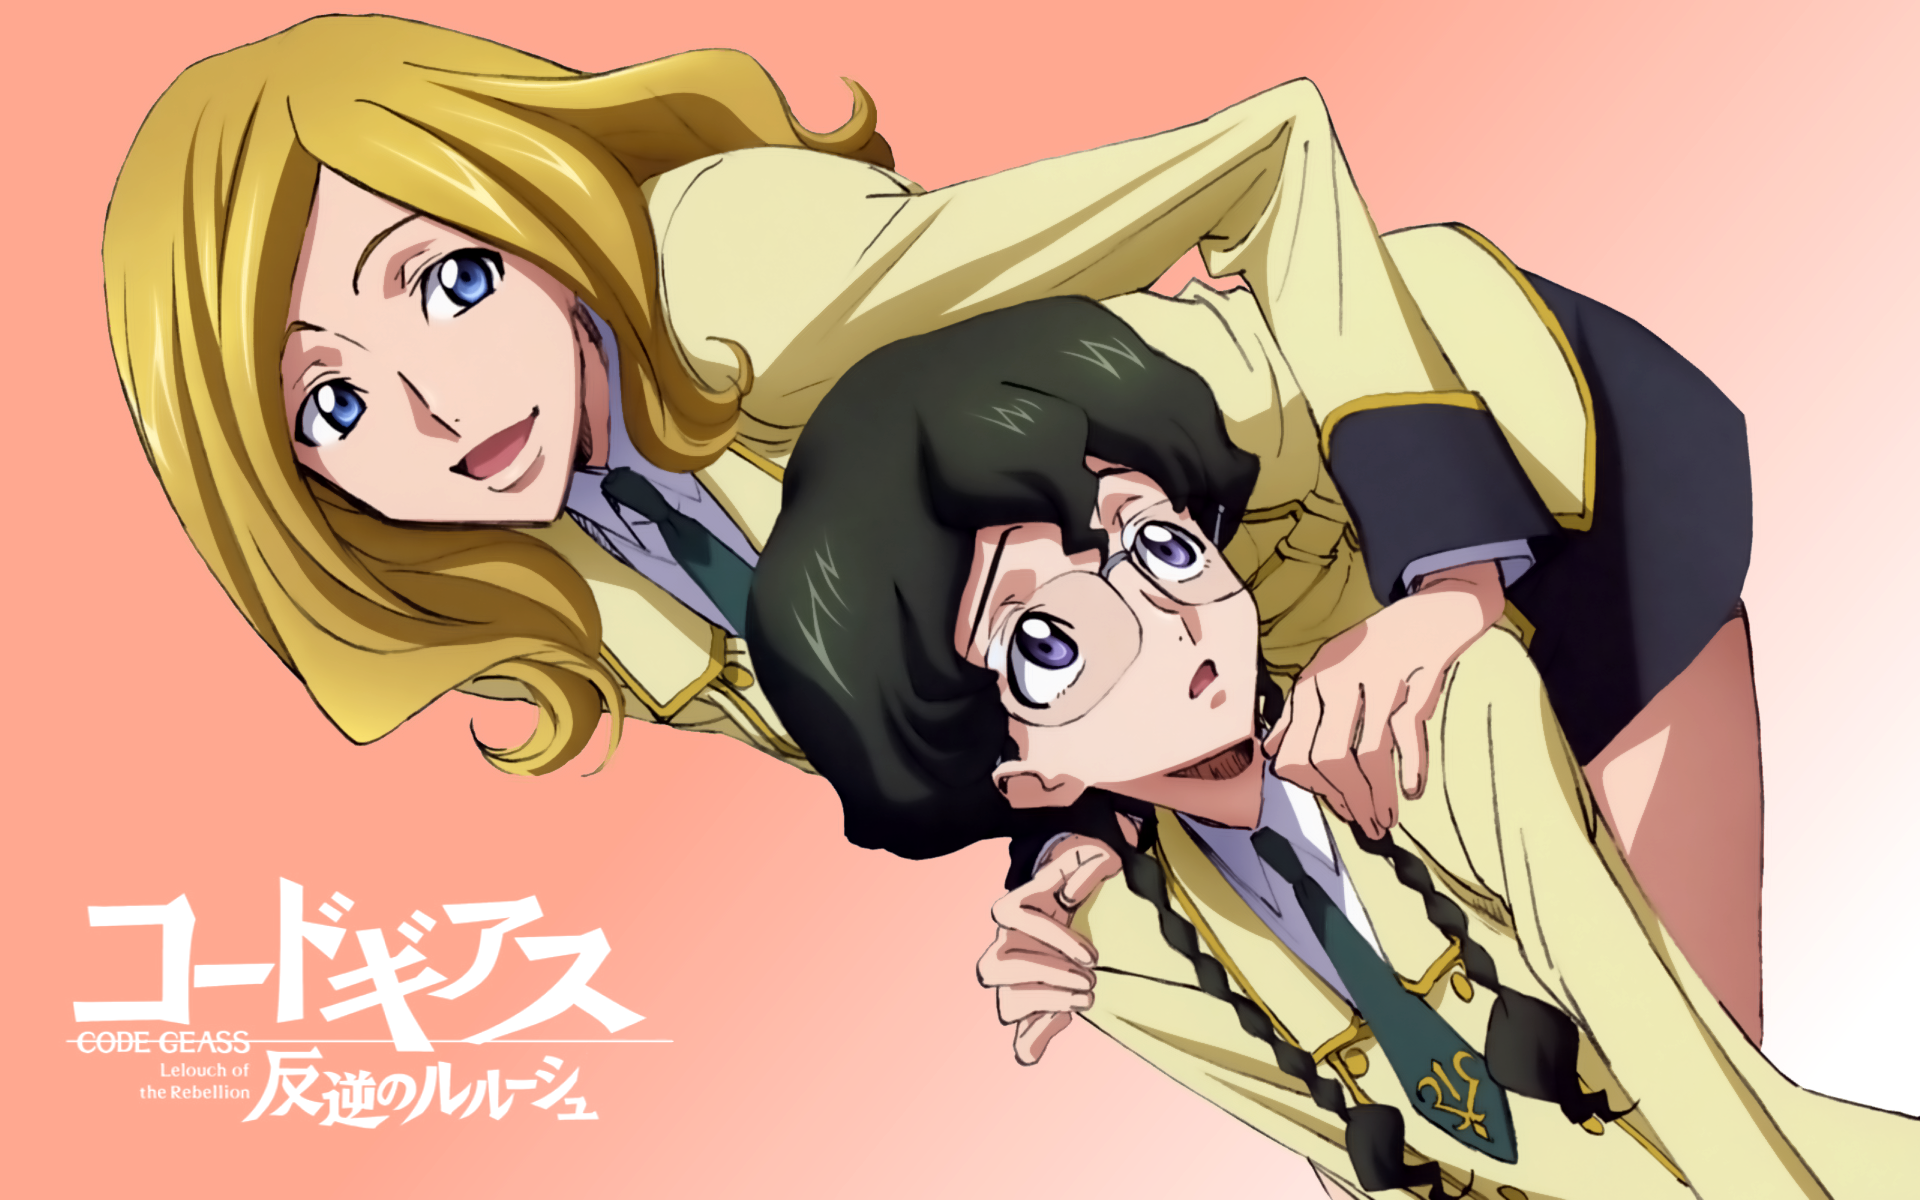 Anime Code Geass HD Wallpaper | Background Image